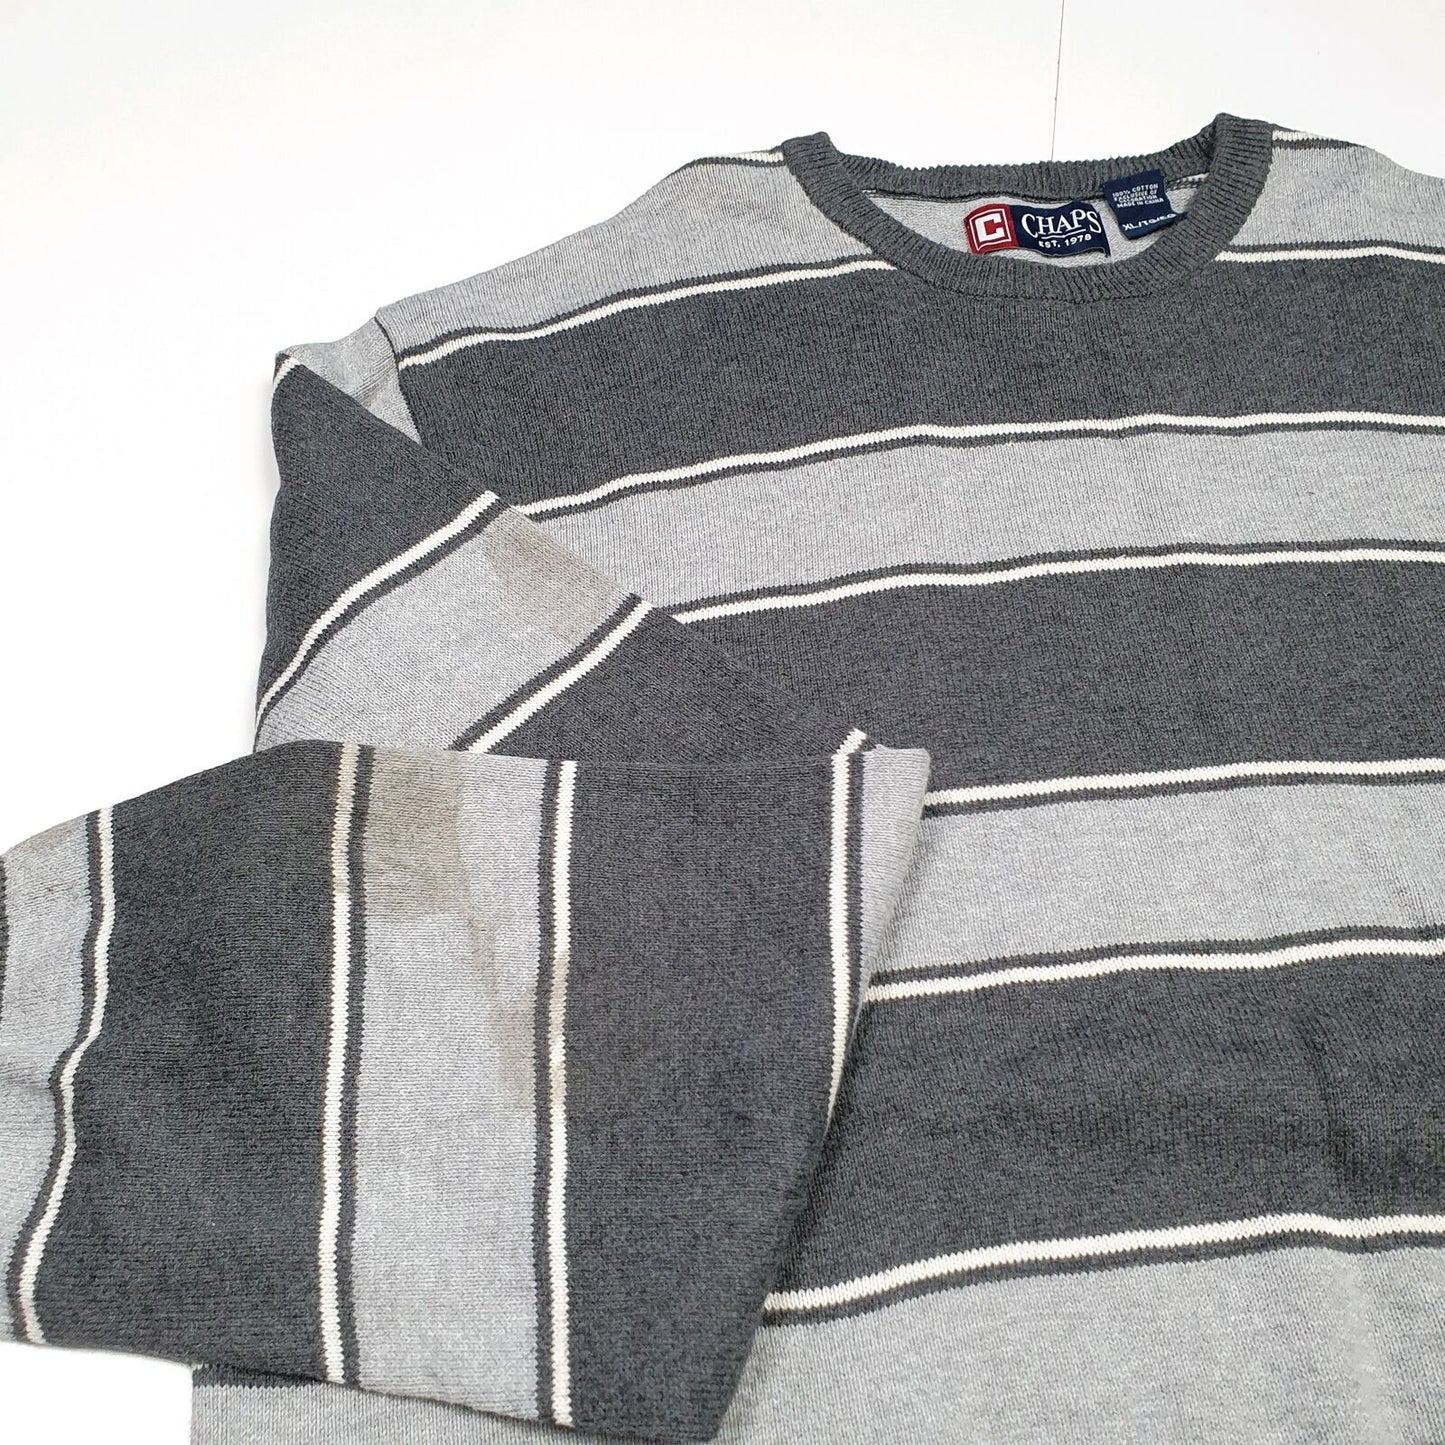 Mens RALPH LAUREN CHAPS Cotton Crewneck Jumper Sweatshirt XL